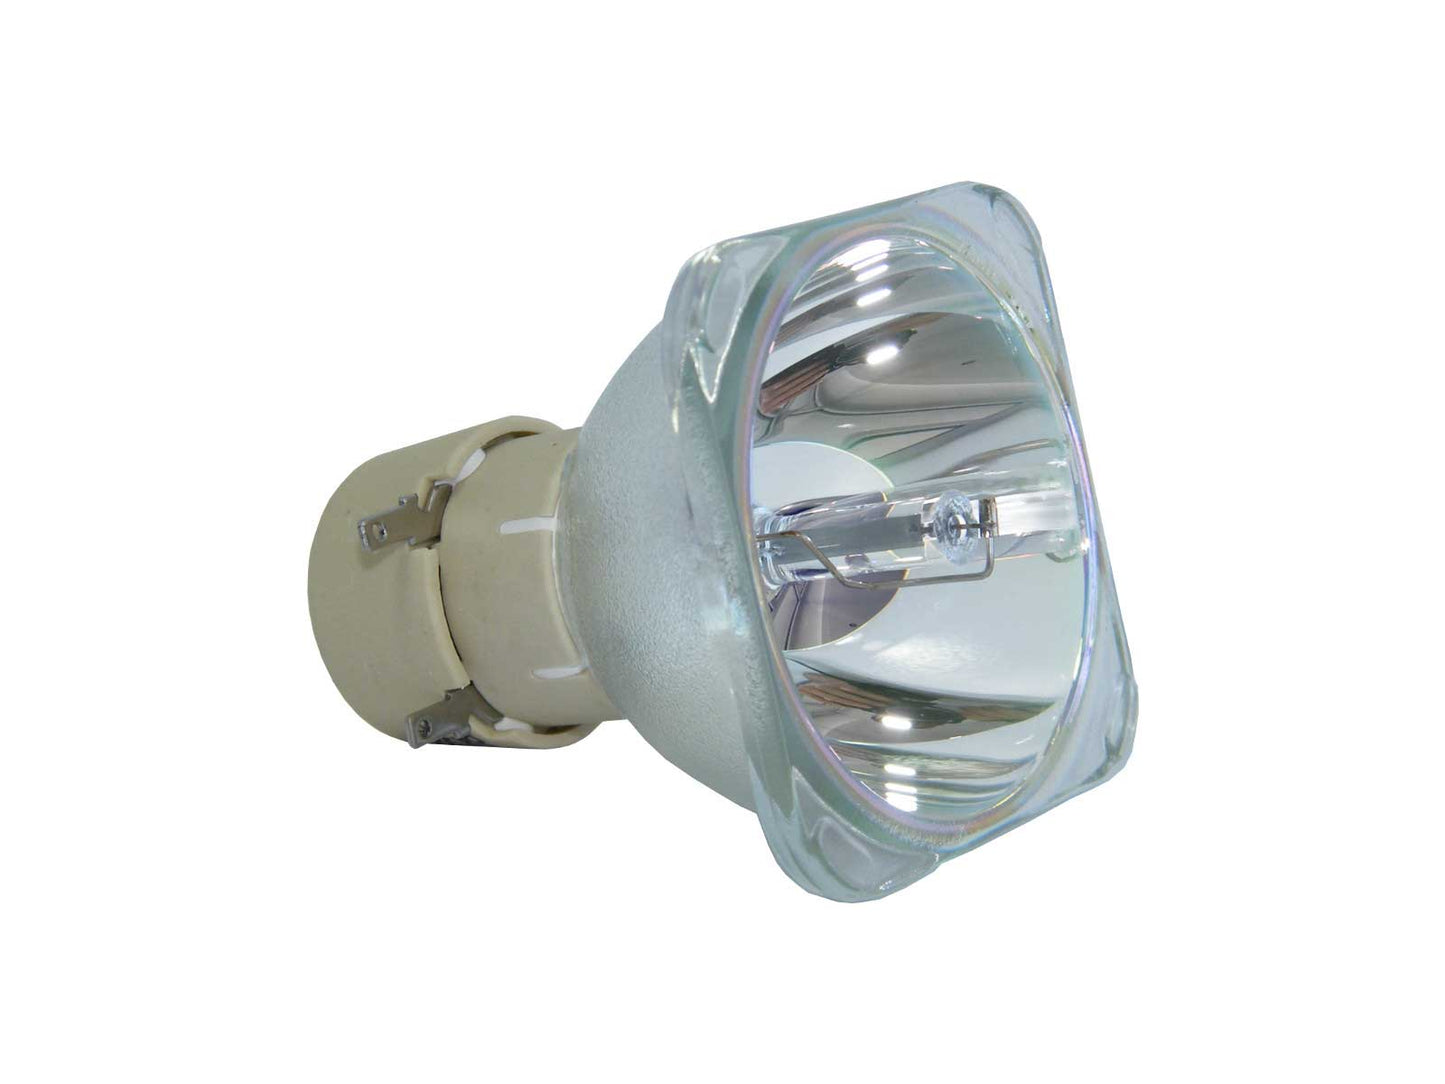 azurano Beamerlampe für SMART BOARD 1025290 Ersatzlampe Projektorlampe - Bild 1